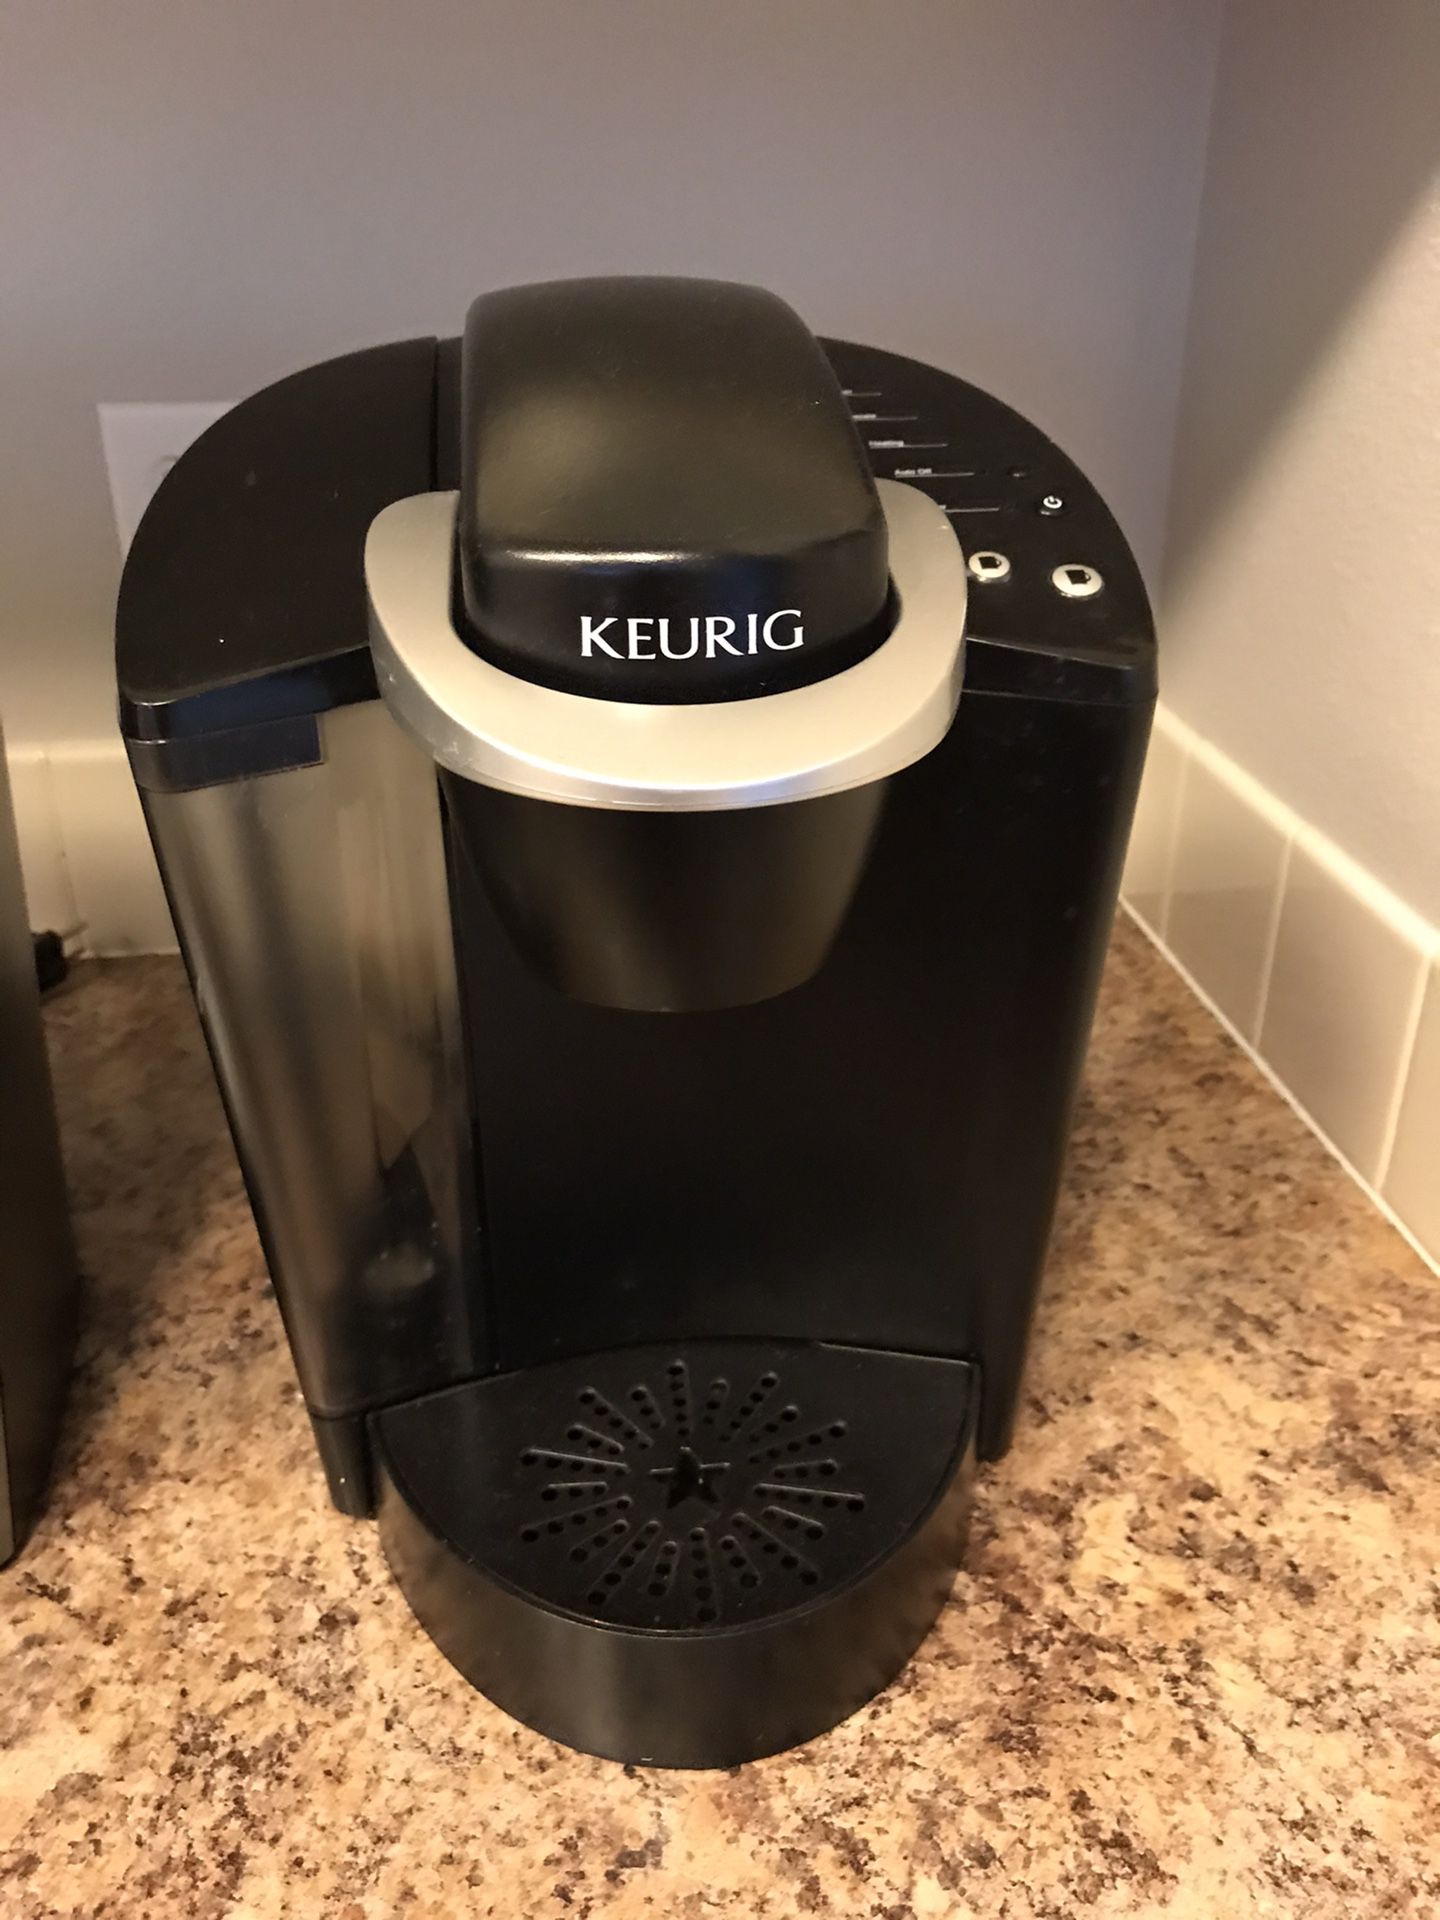 Keurig coffee maker-excellent condition